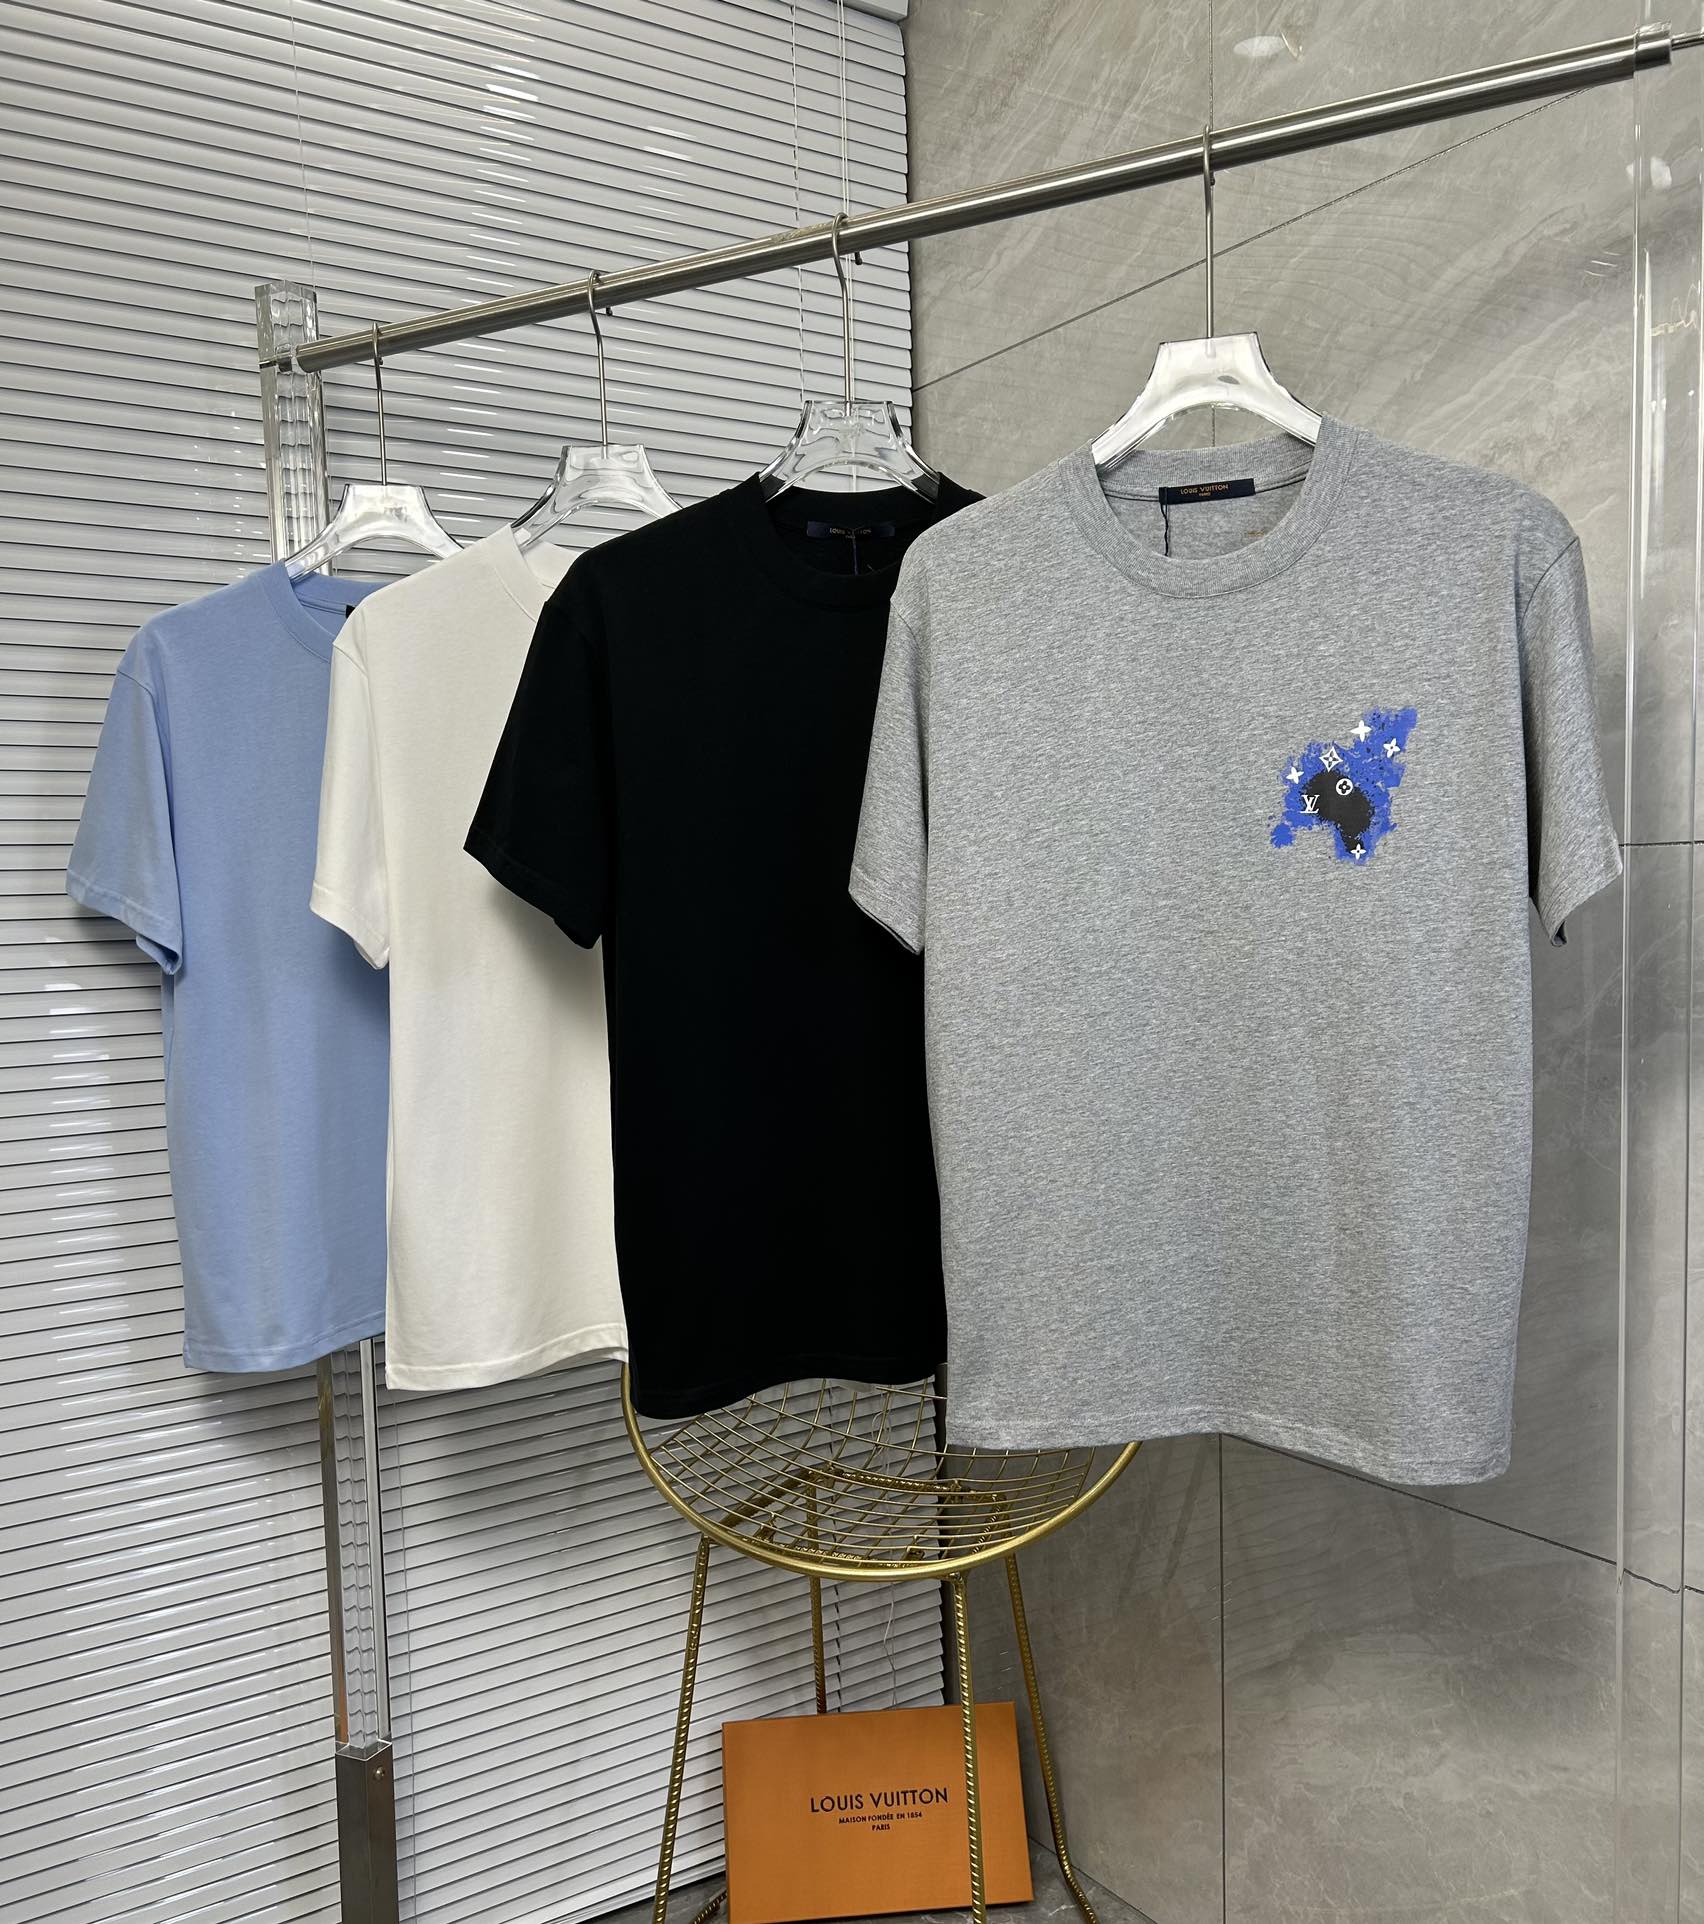 Louis Vuitton Clothing T-Shirt Black Blue Grey Light White Printing Unisex Spring/Summer Collection Fashion Short Sleeve